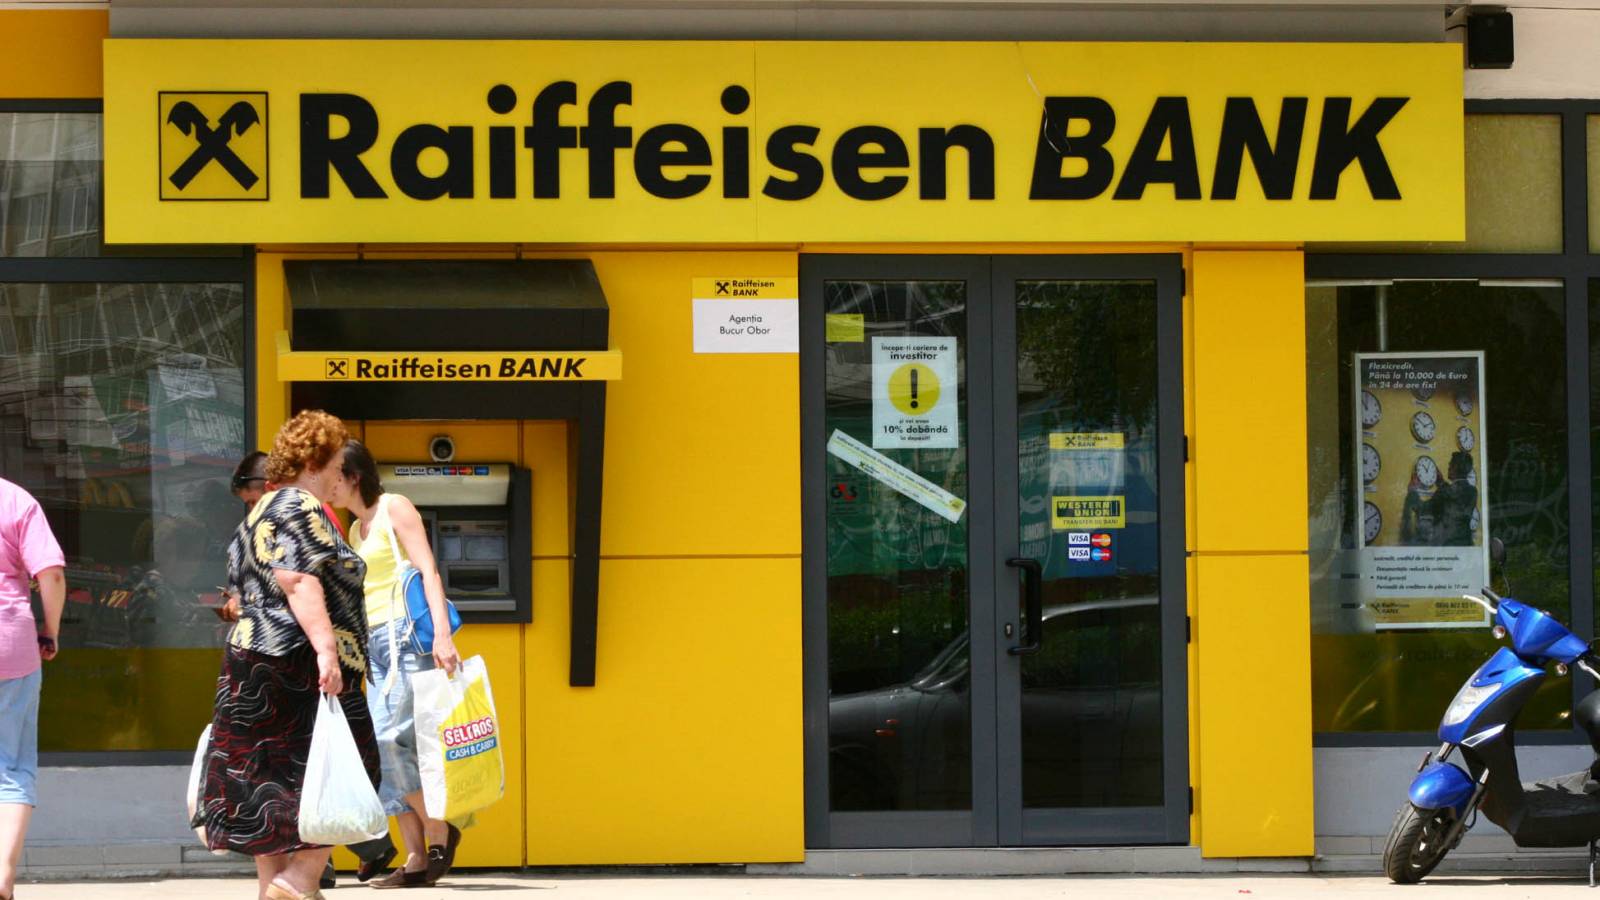 Raiffeisenbank microsoft